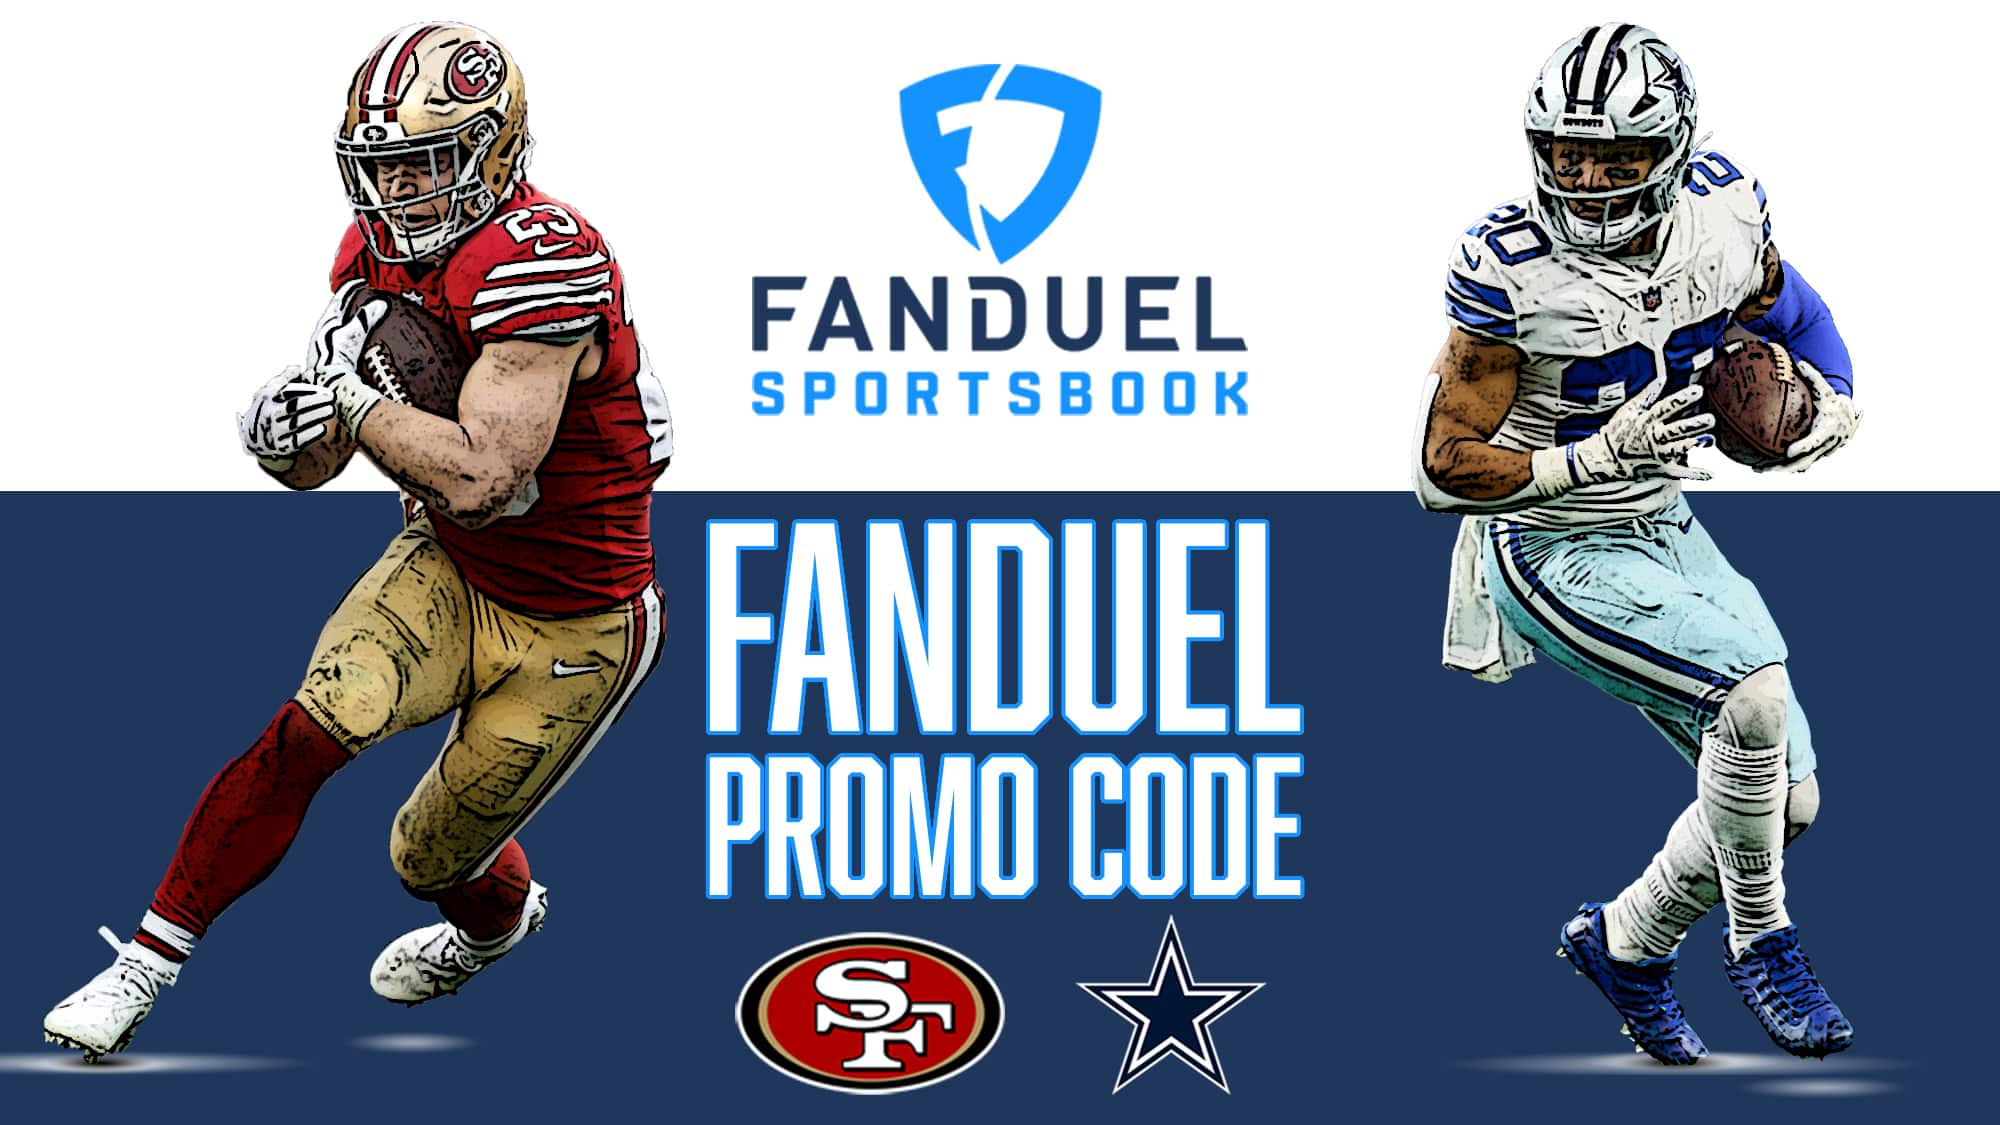 FanDuel Promo Code: Claim $150 Now